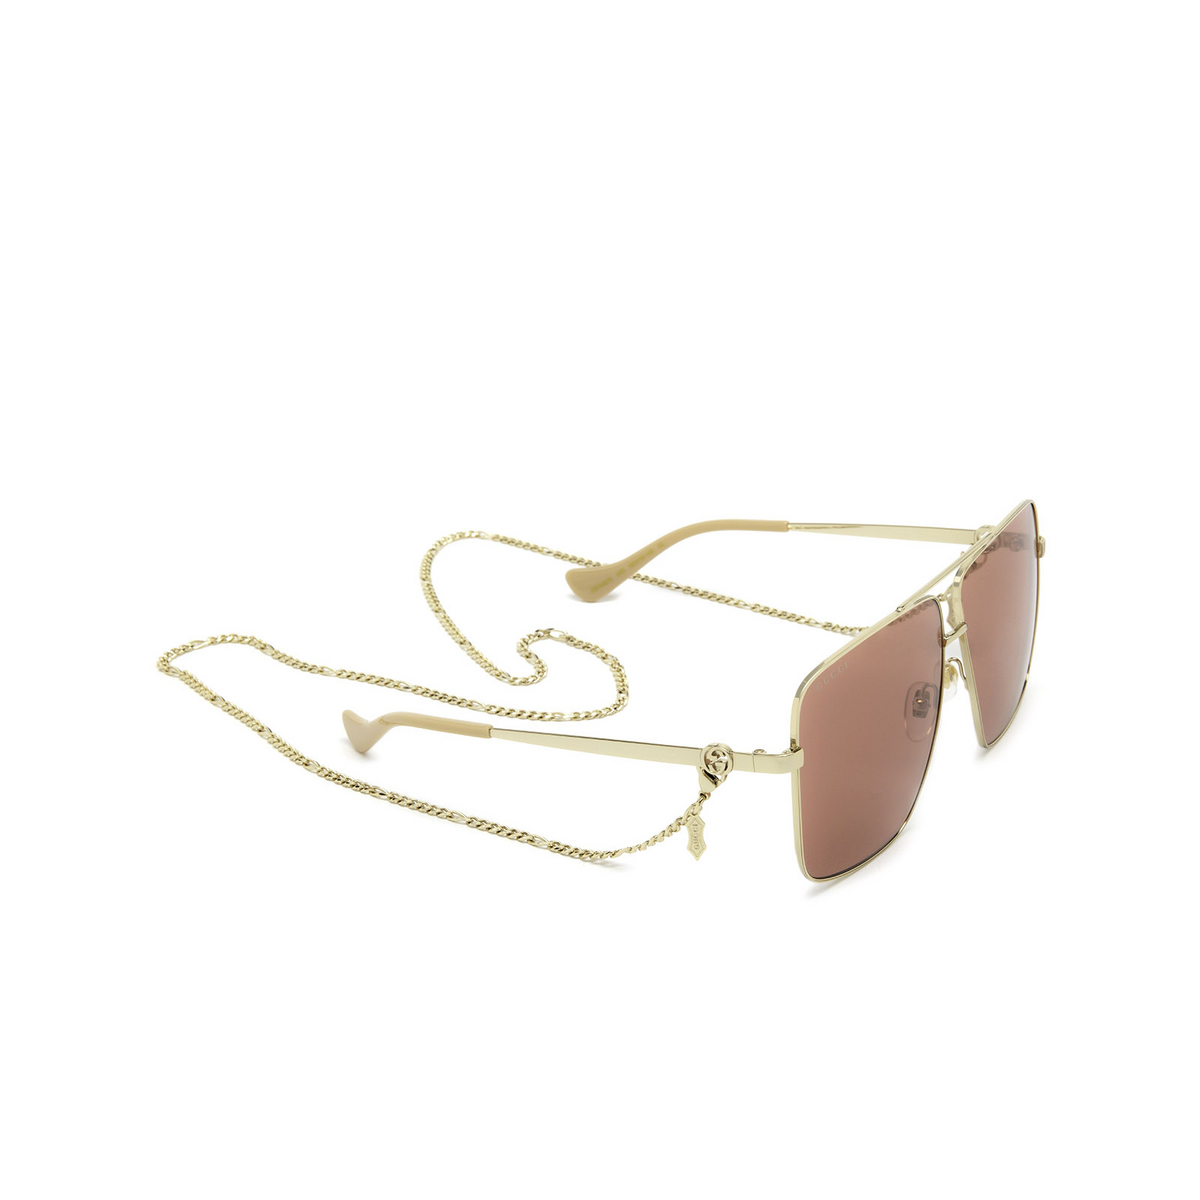 Gucci® Irregular Sunglasses: GG1087S color Gold 003 - three-quarters view.